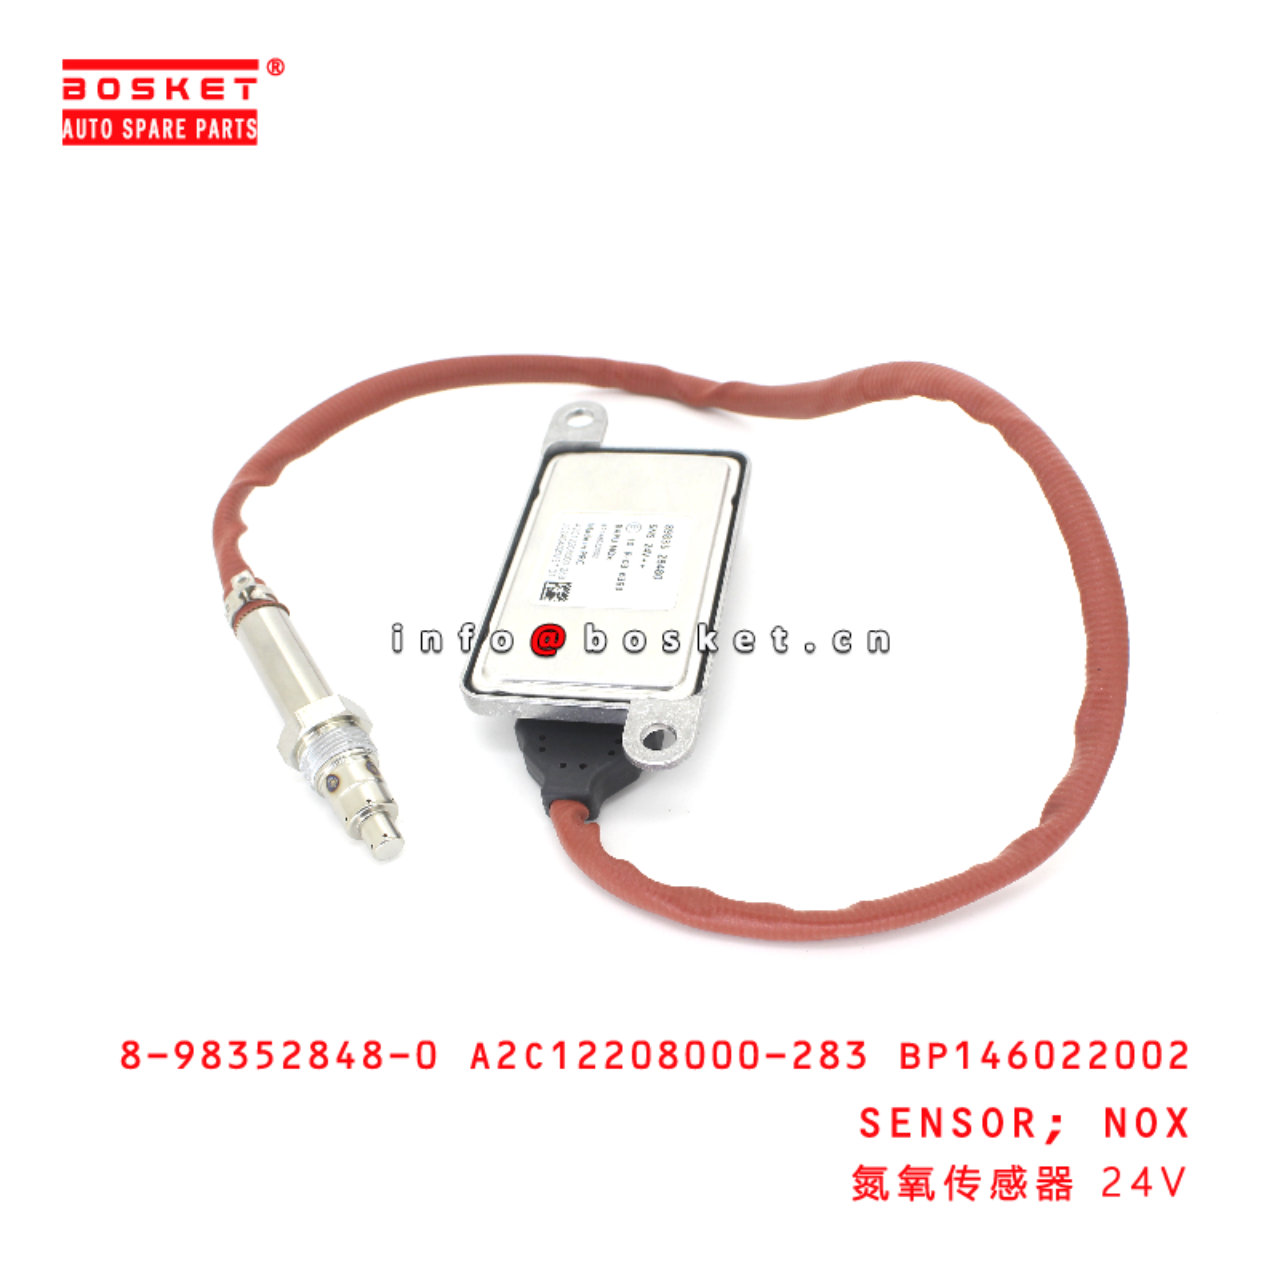 8-98352848-0 A2C12208000-283 BP146022002 Nox Sensor suitable for ISUZU 8983528480